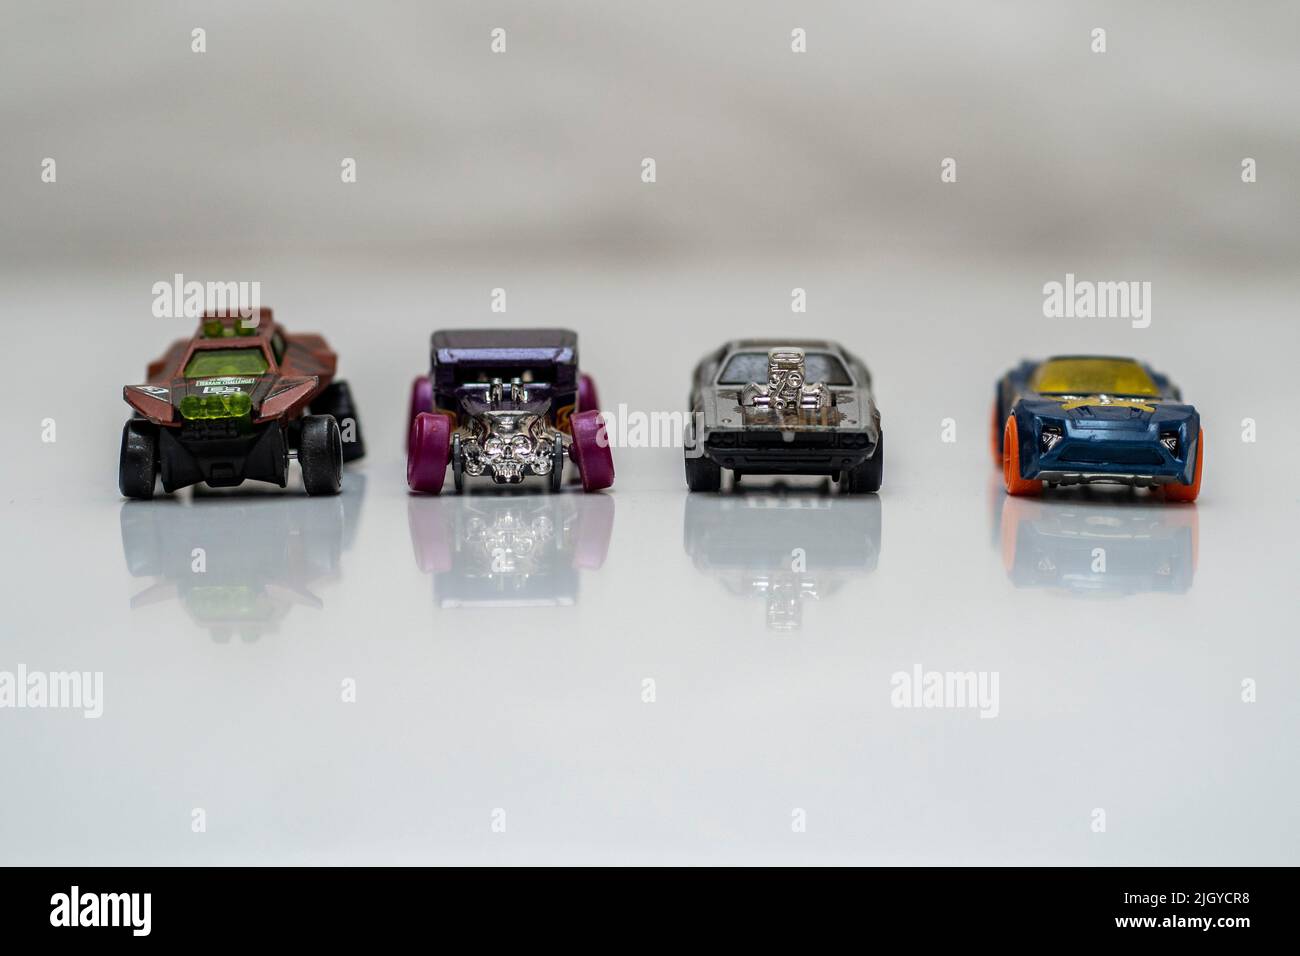 Quattro Hot Wheels in miniatura pressofuso su una superficie bianca Foto Stock